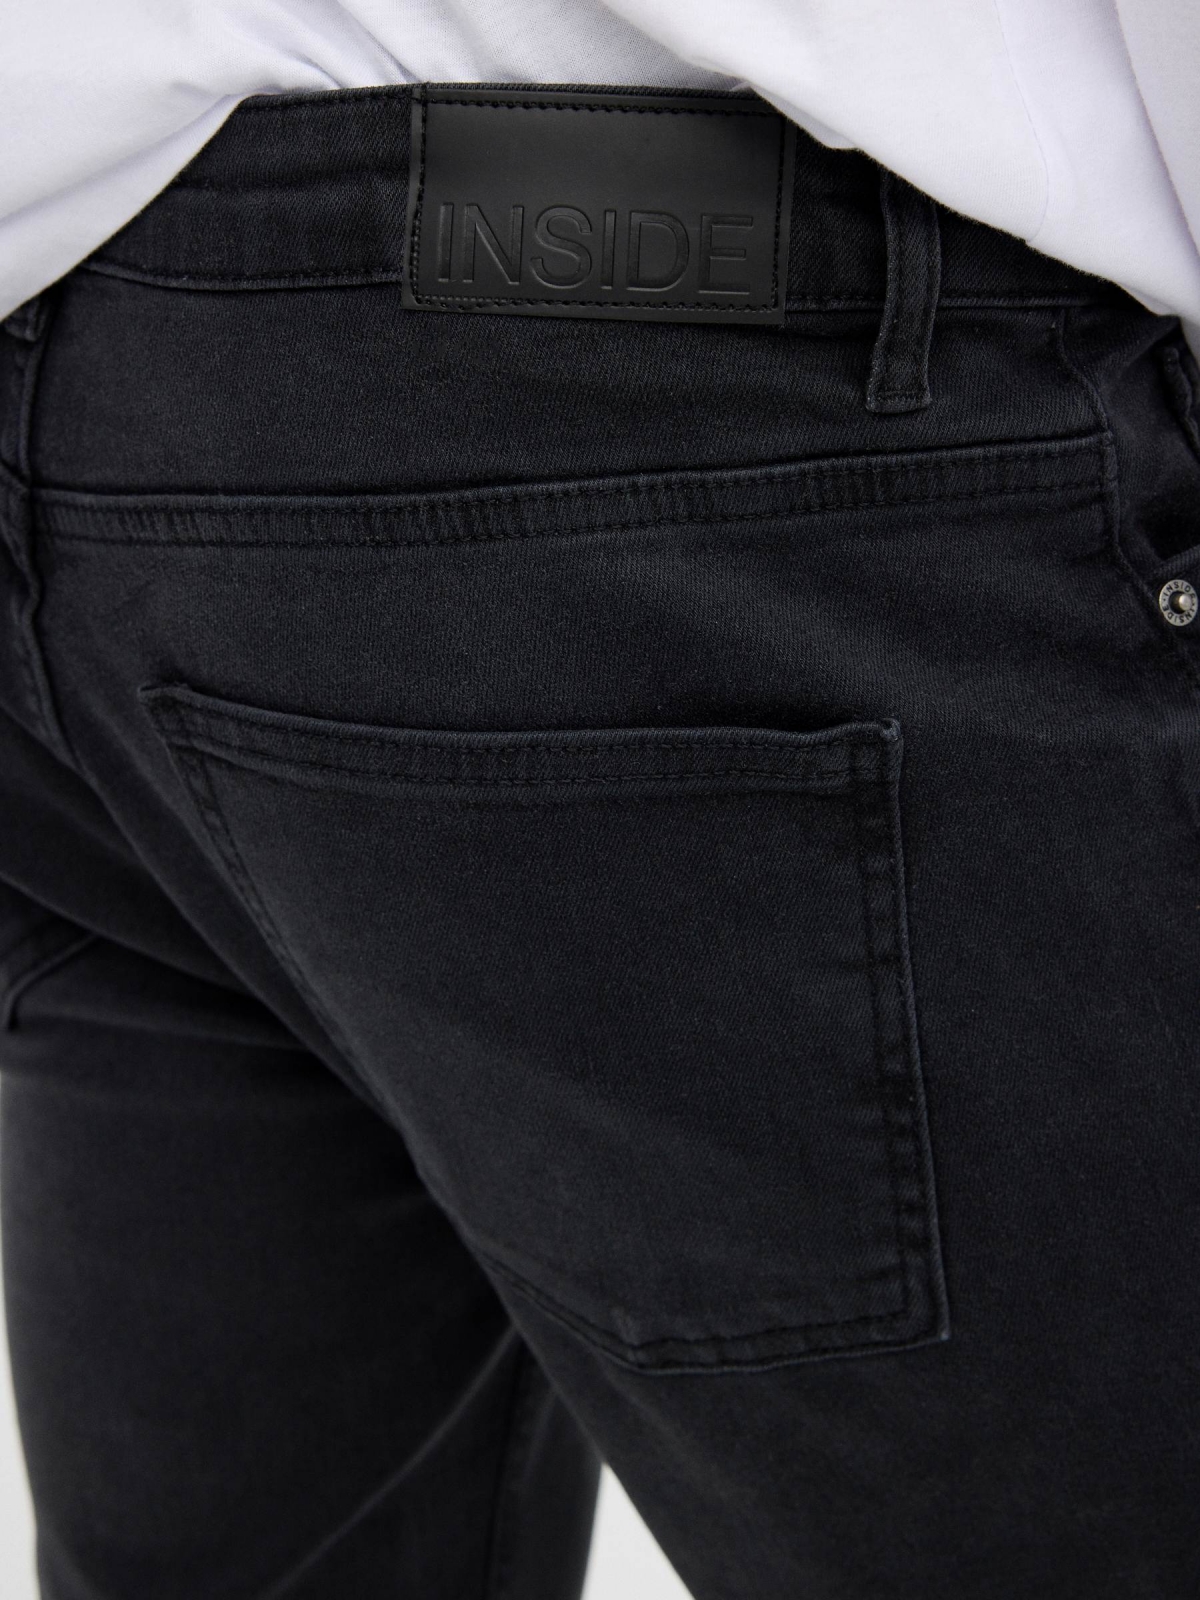 Regular jeans dark grey detail view